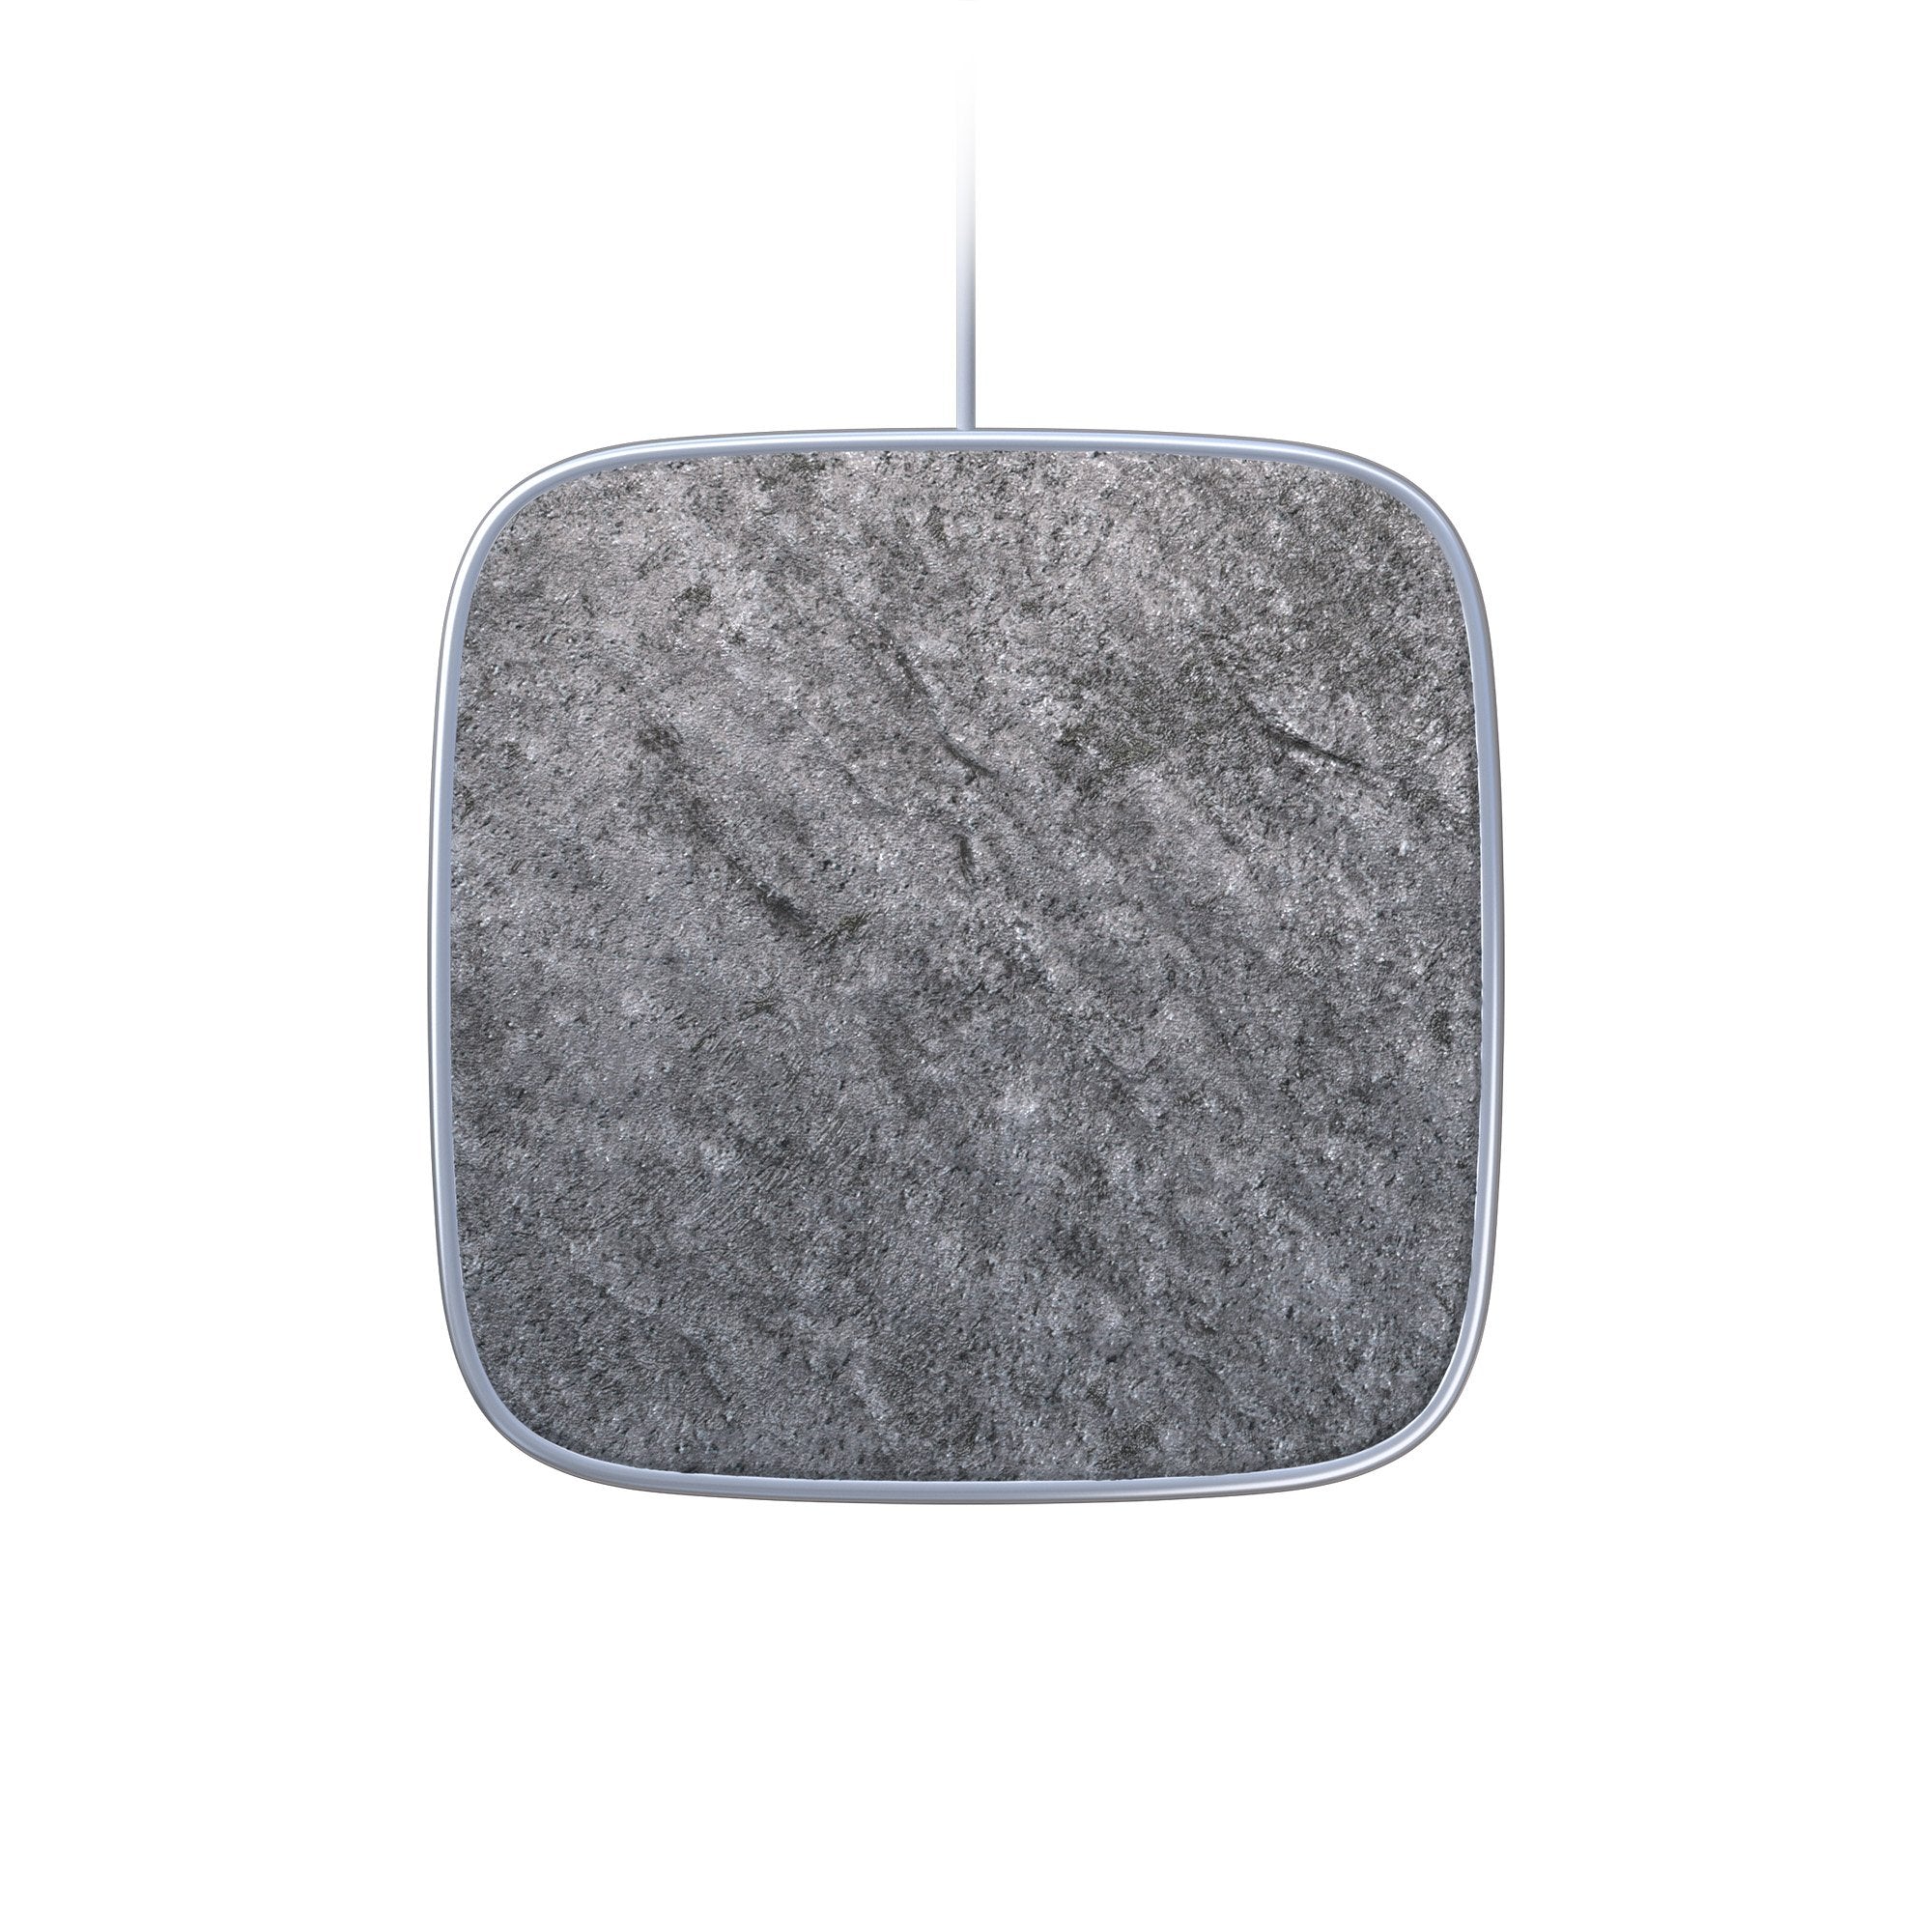 bazaardodo-stone-wireless-charger-yosemite